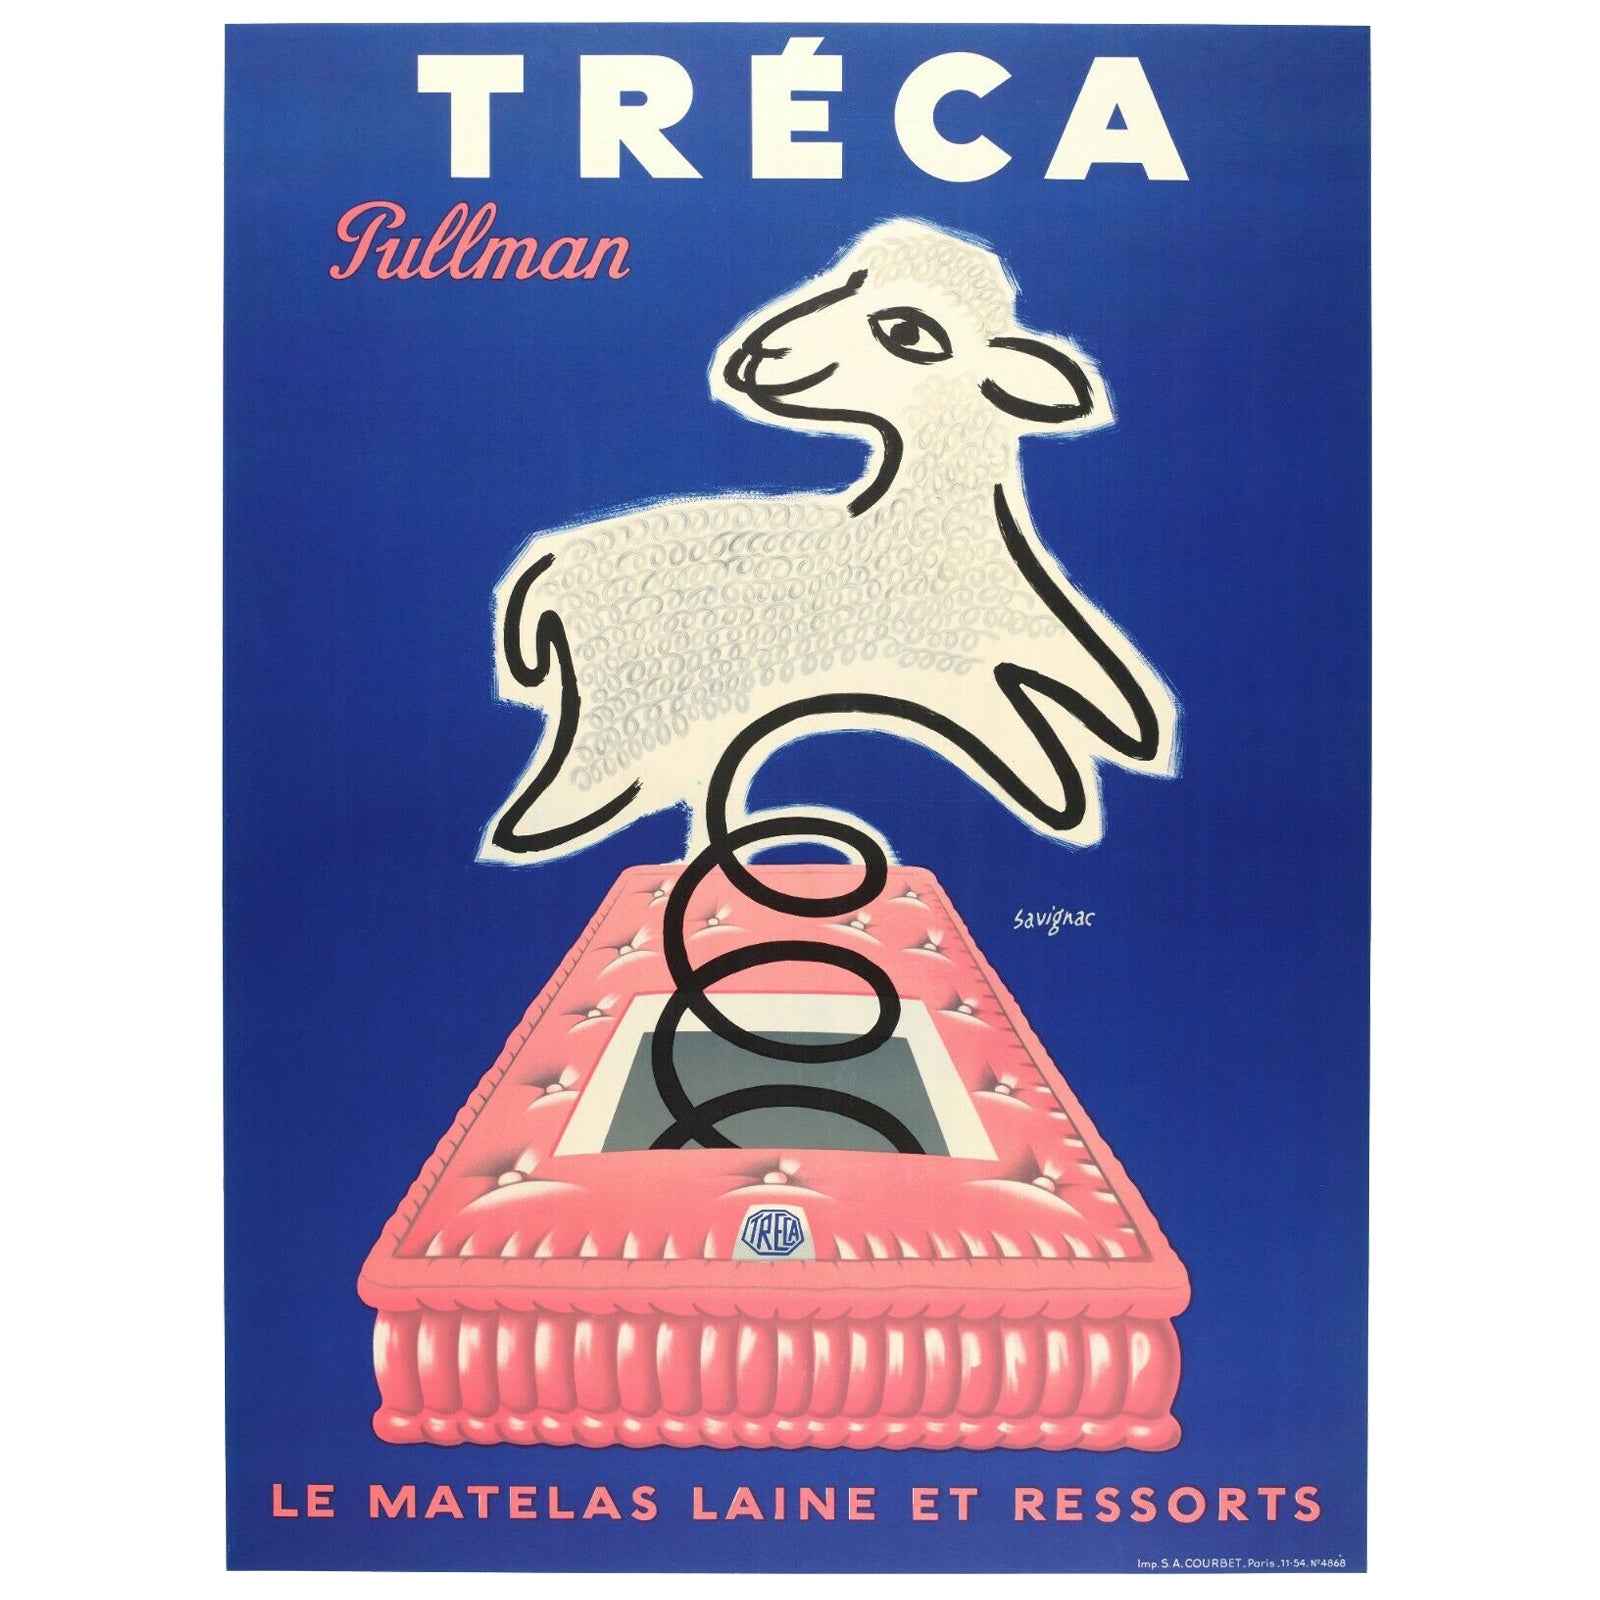 Affiche vintage d'origine Raymond Savignac-Treca-Pullman-Matelas, 1954